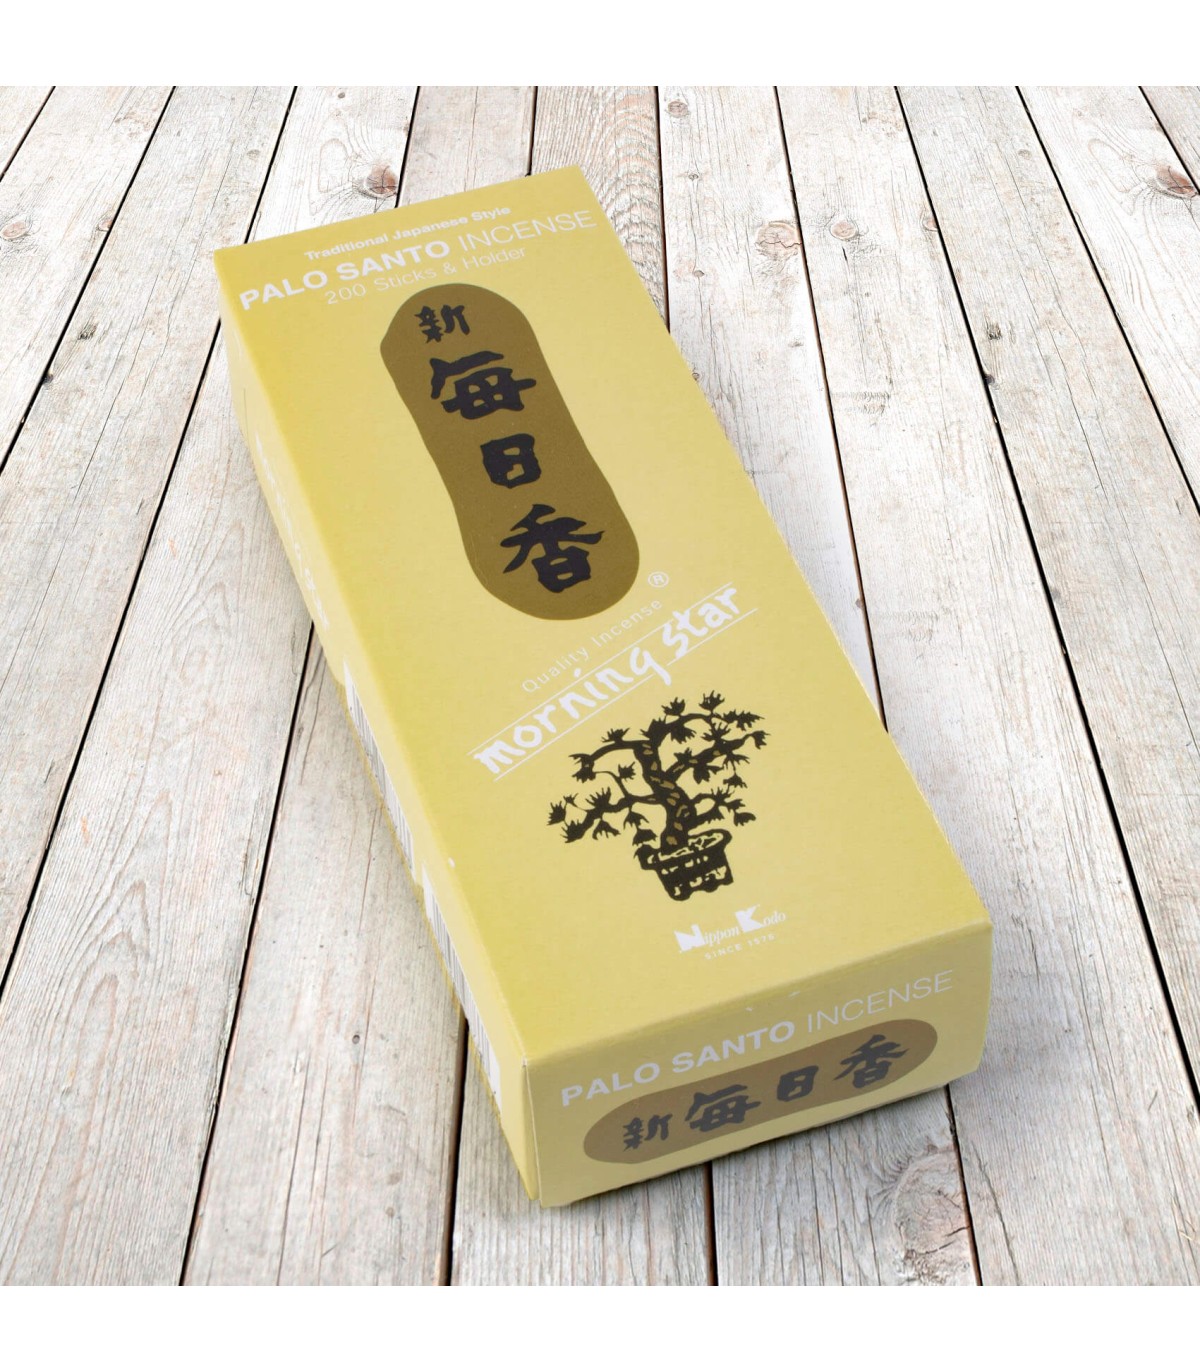 Caja de 50 varitas de incienso japonés, MORNING STAR PINE, aroma a pino